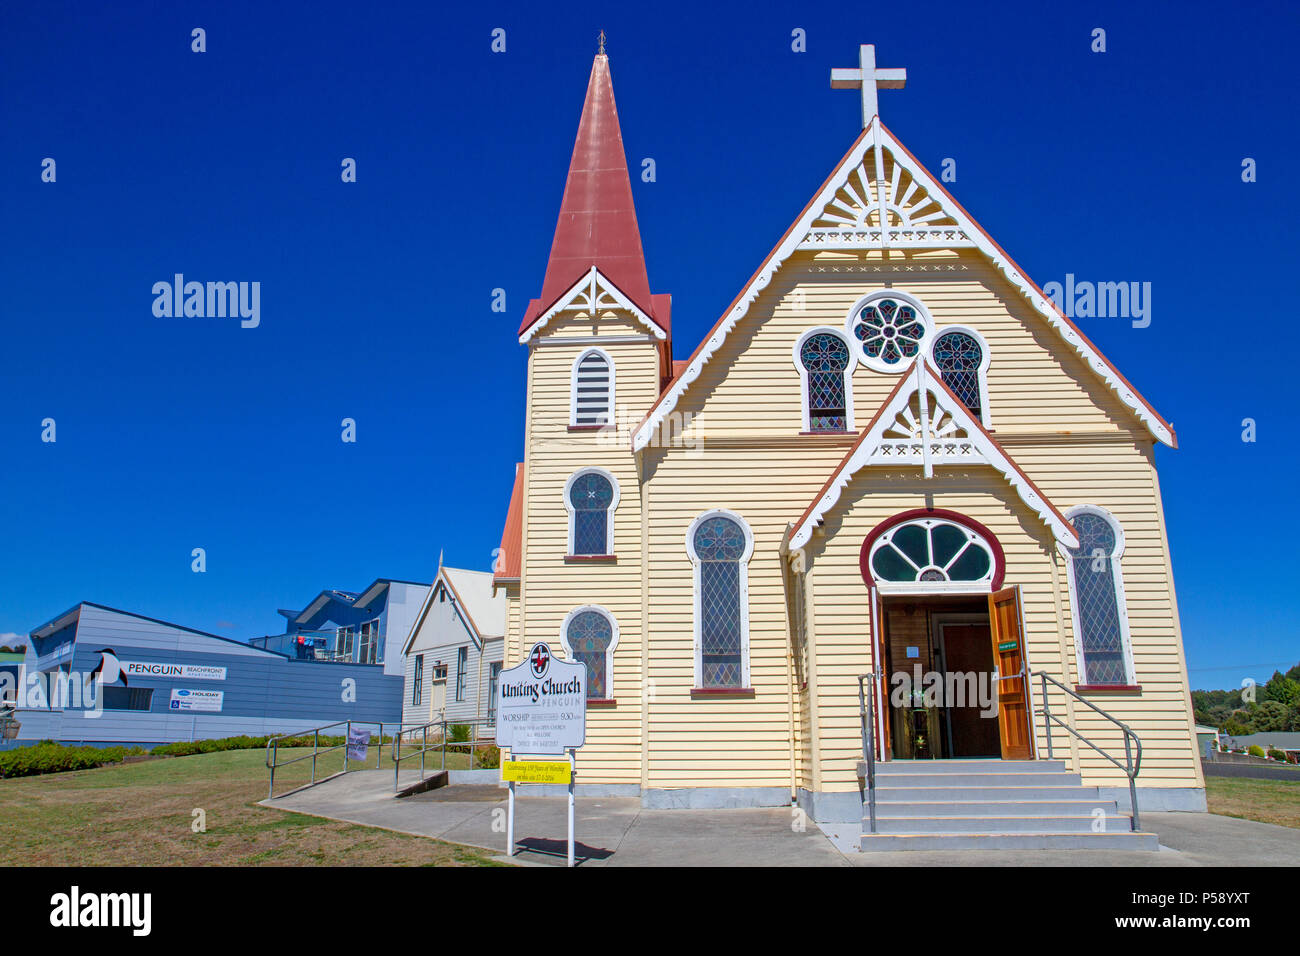 Unionskirche in Penguin Stockfoto